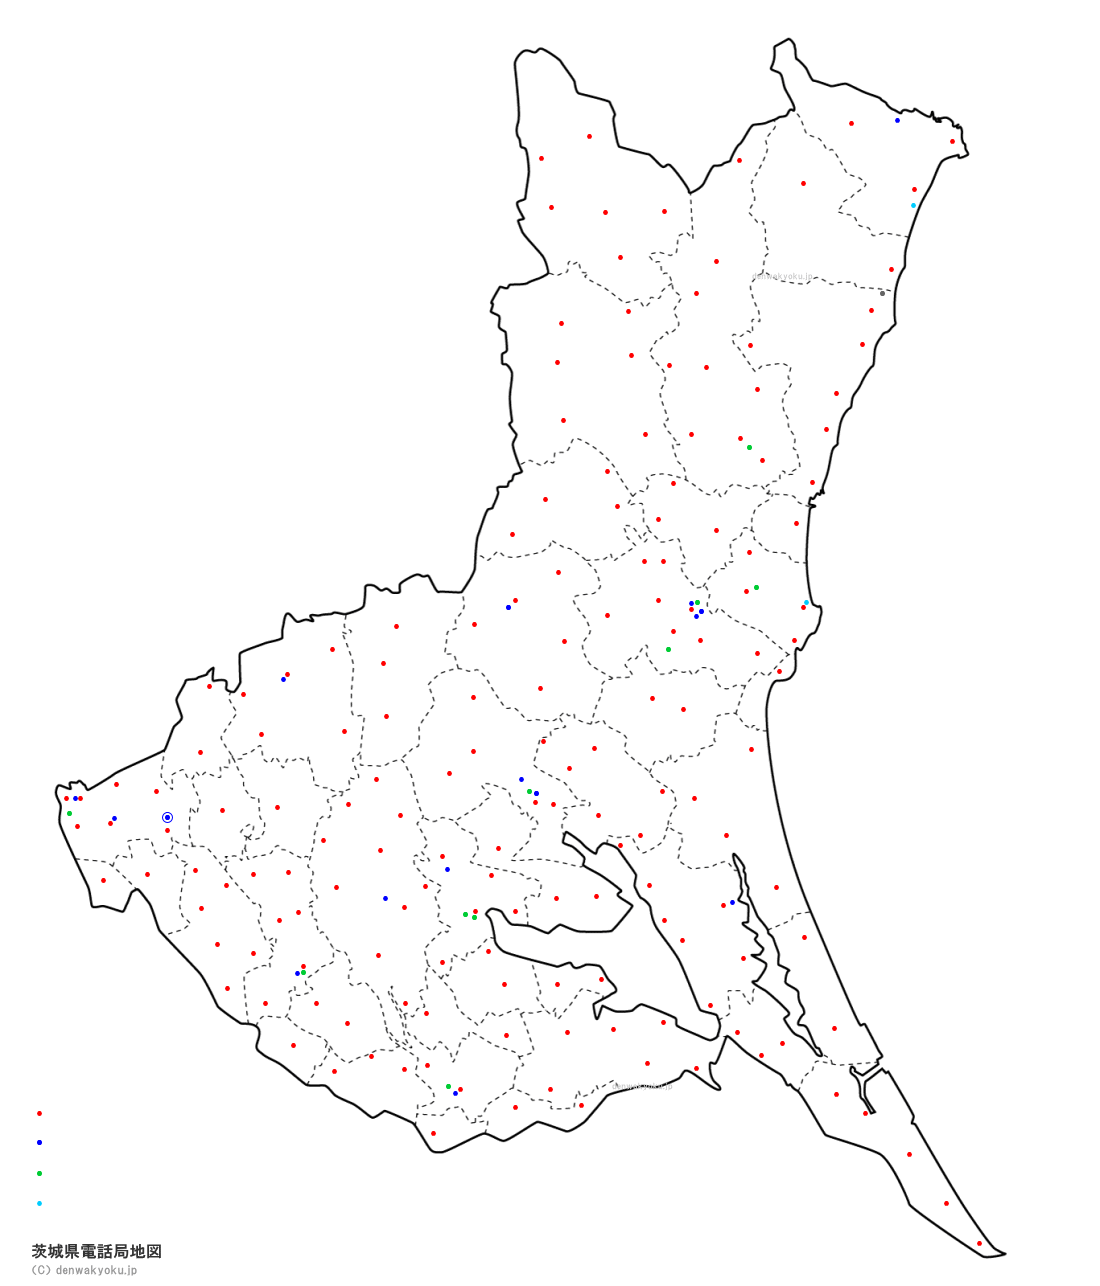 茨城県電話局地図（NTT収容局マップ）